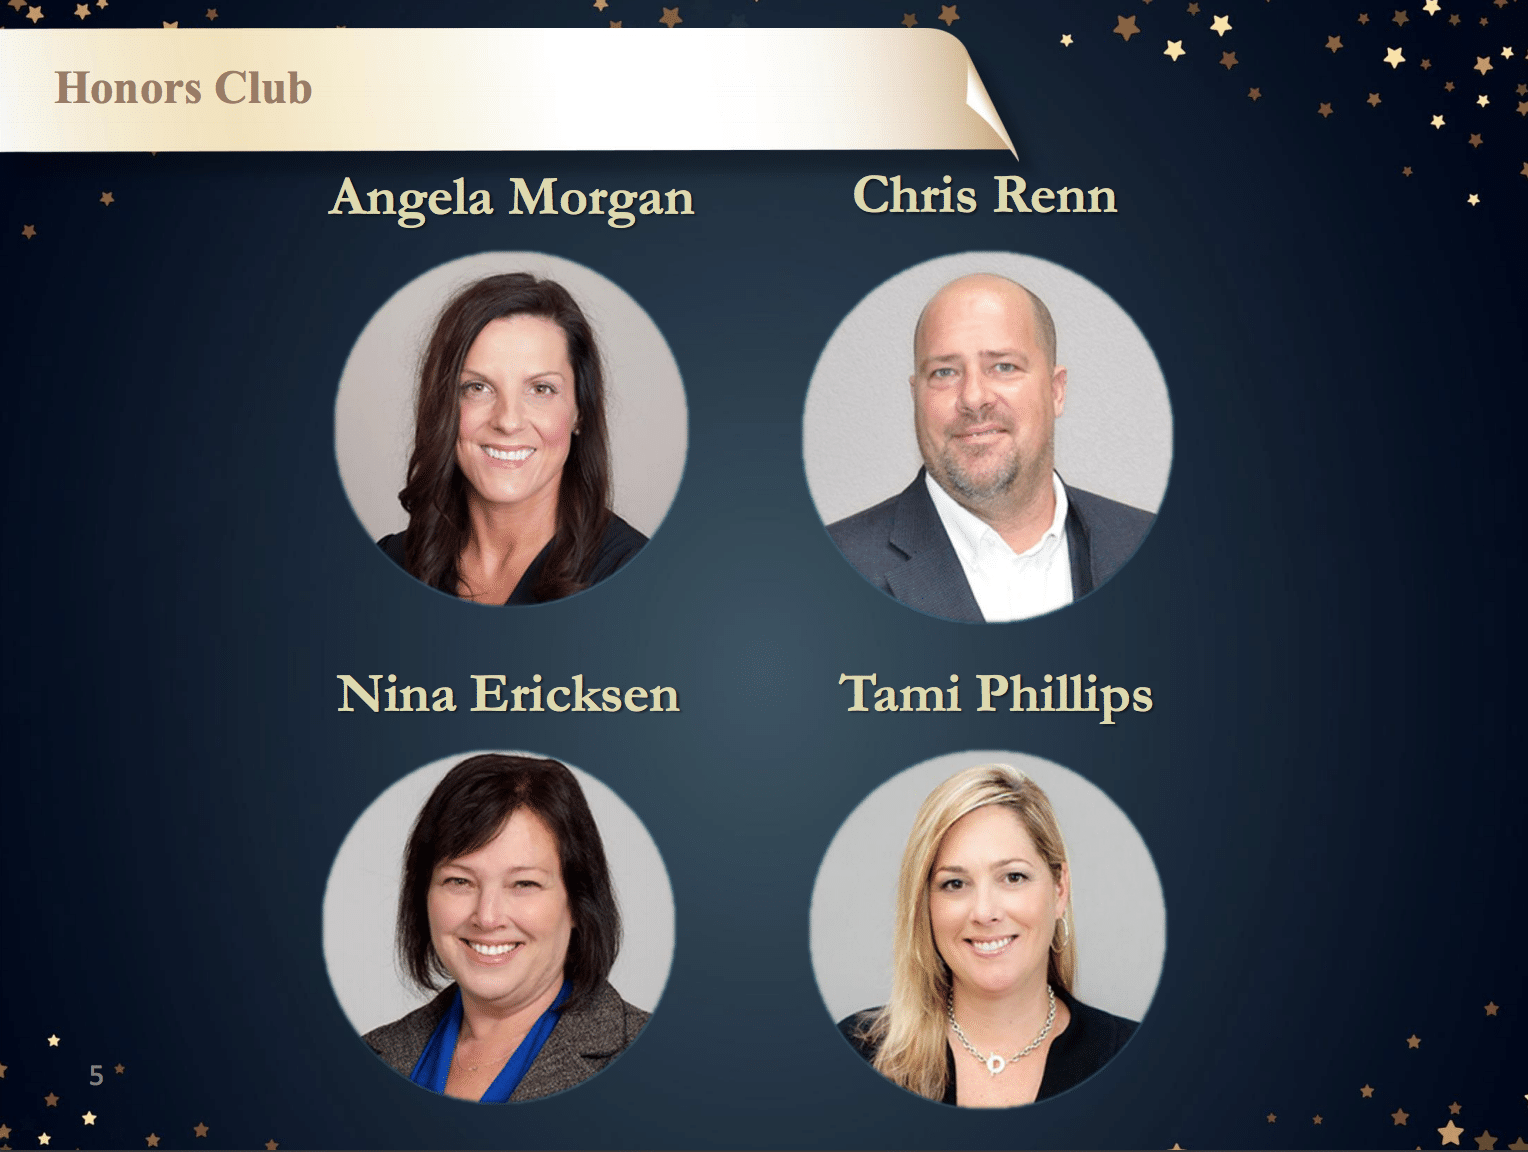 PR Awards - Honors Club Awardees: Angela Morgan, Chris Renn, Nina Ericksen, and Tami Phillips